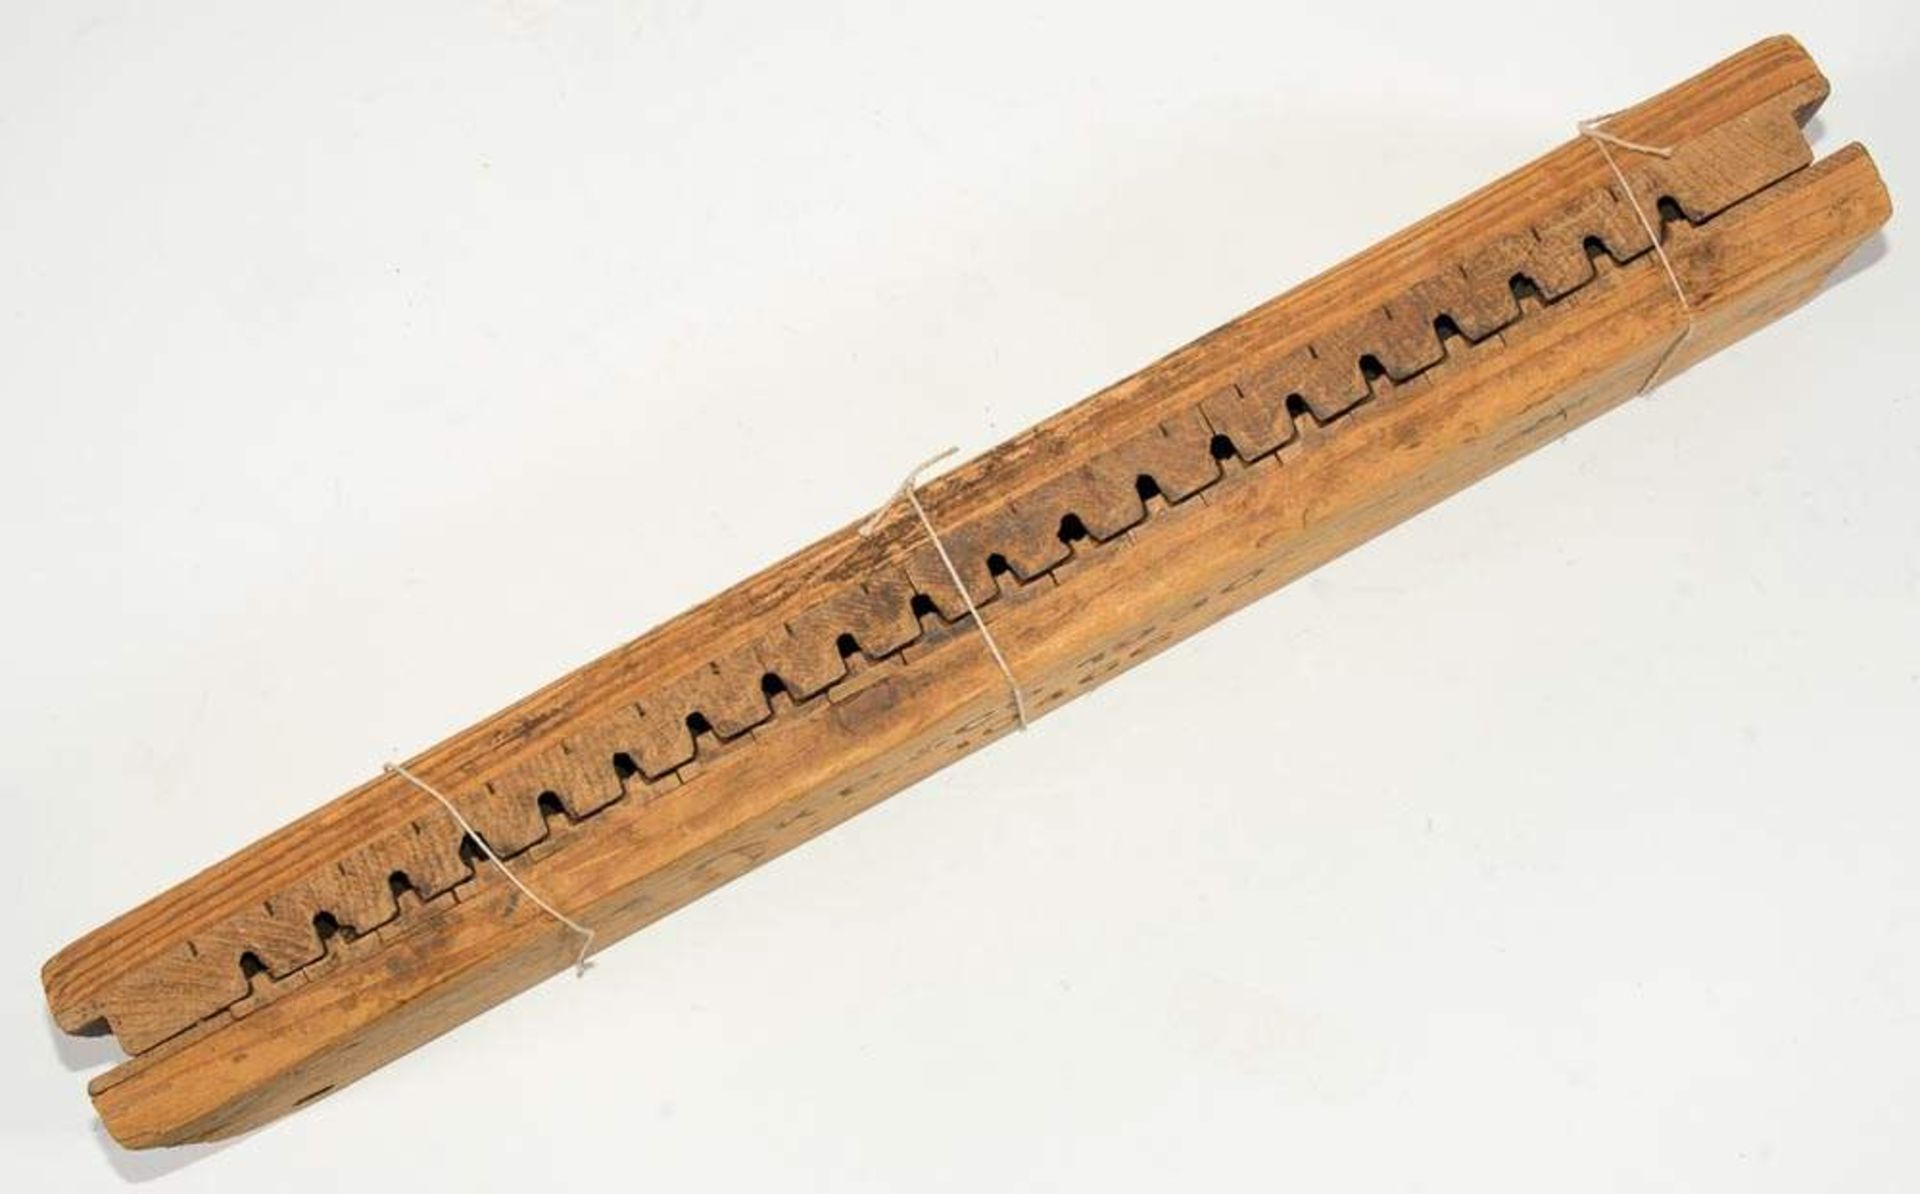 Zigarrenpresse. Holz. Bez. "K. B. & Co. 1930 -  No. 10466". Länge 57 cm. - Image 3 of 5